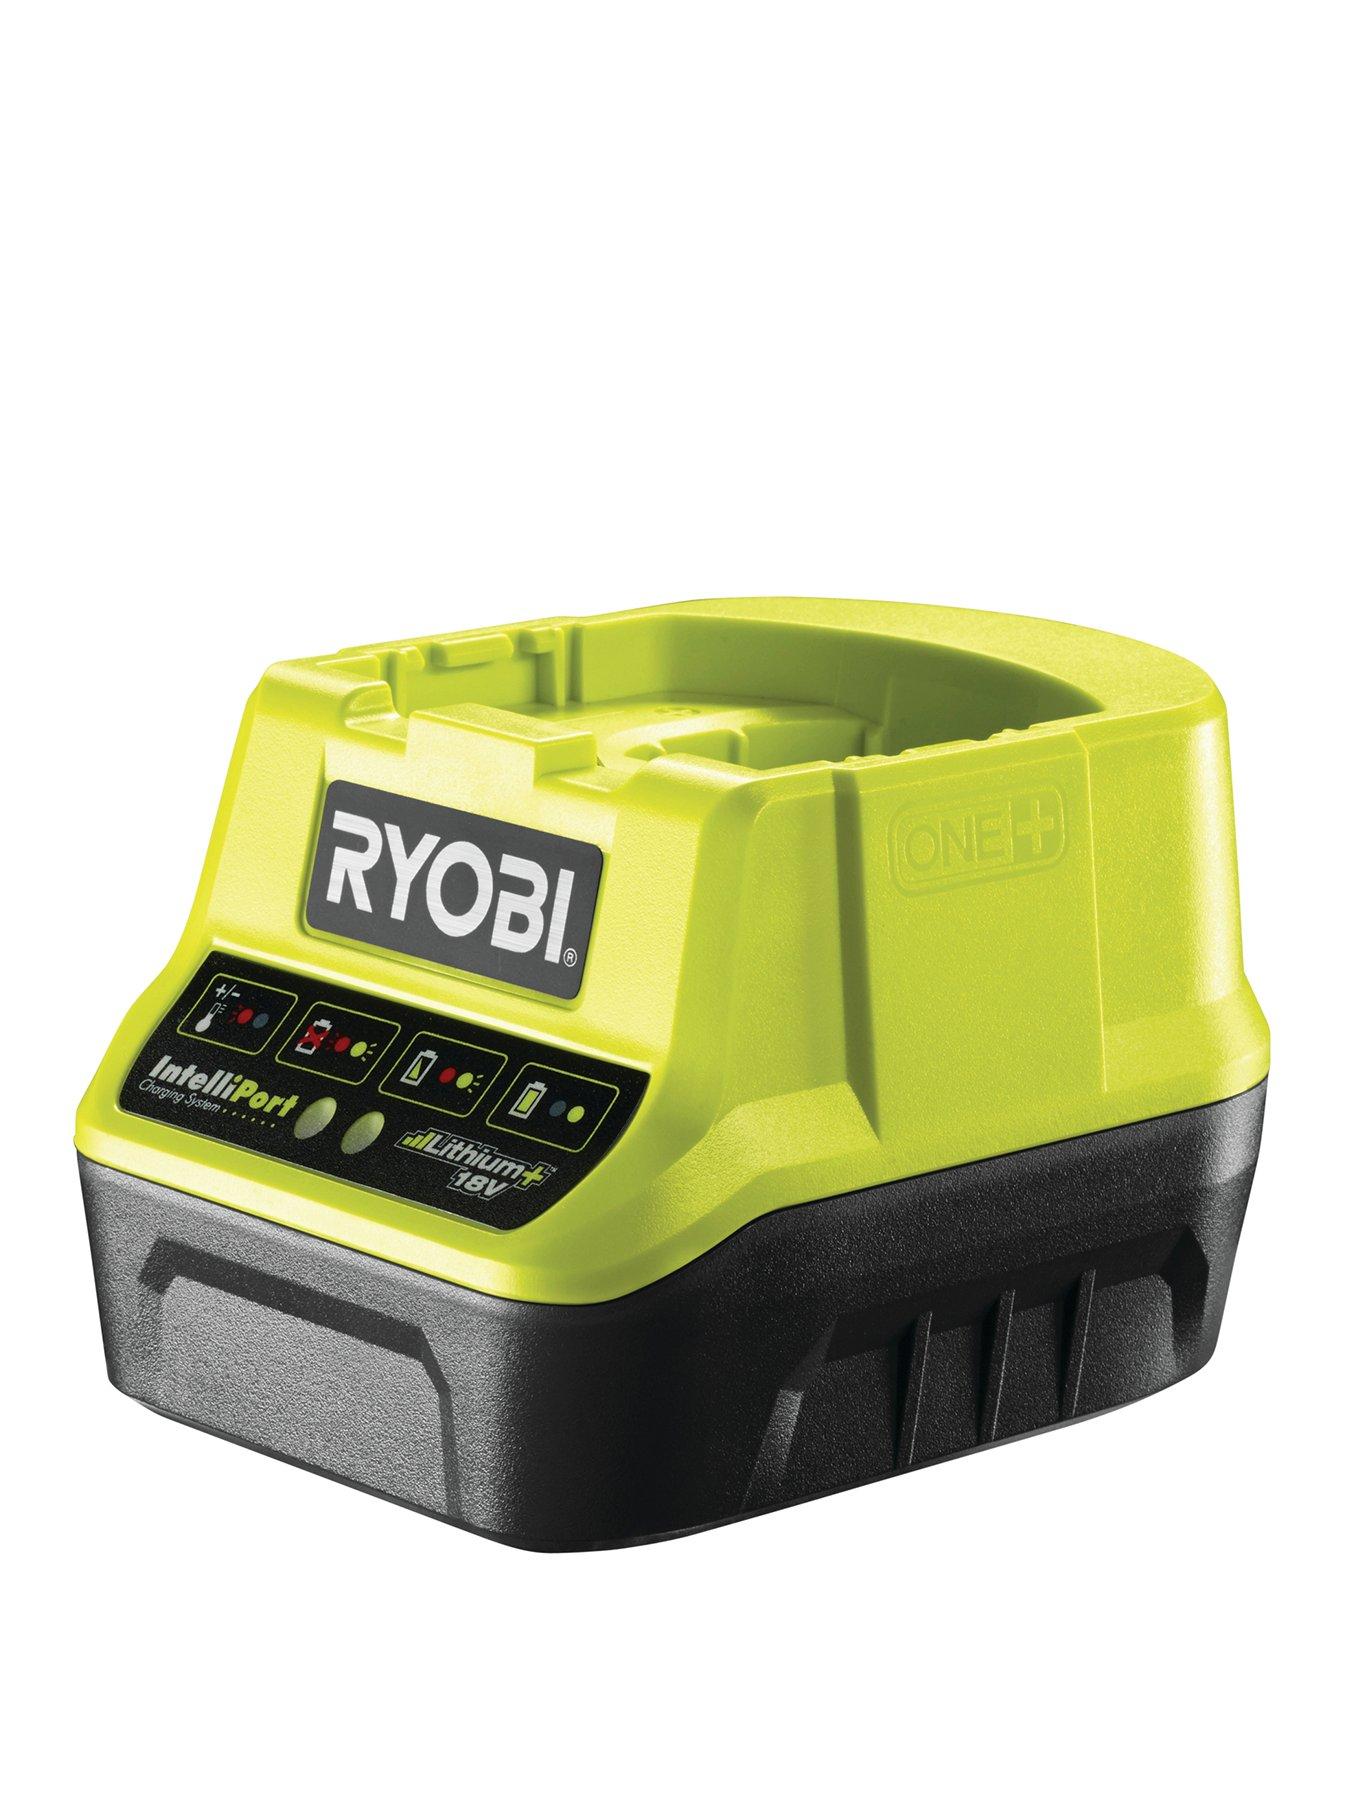 RYOBI RC18120 18V ONE+  Battery Charger 